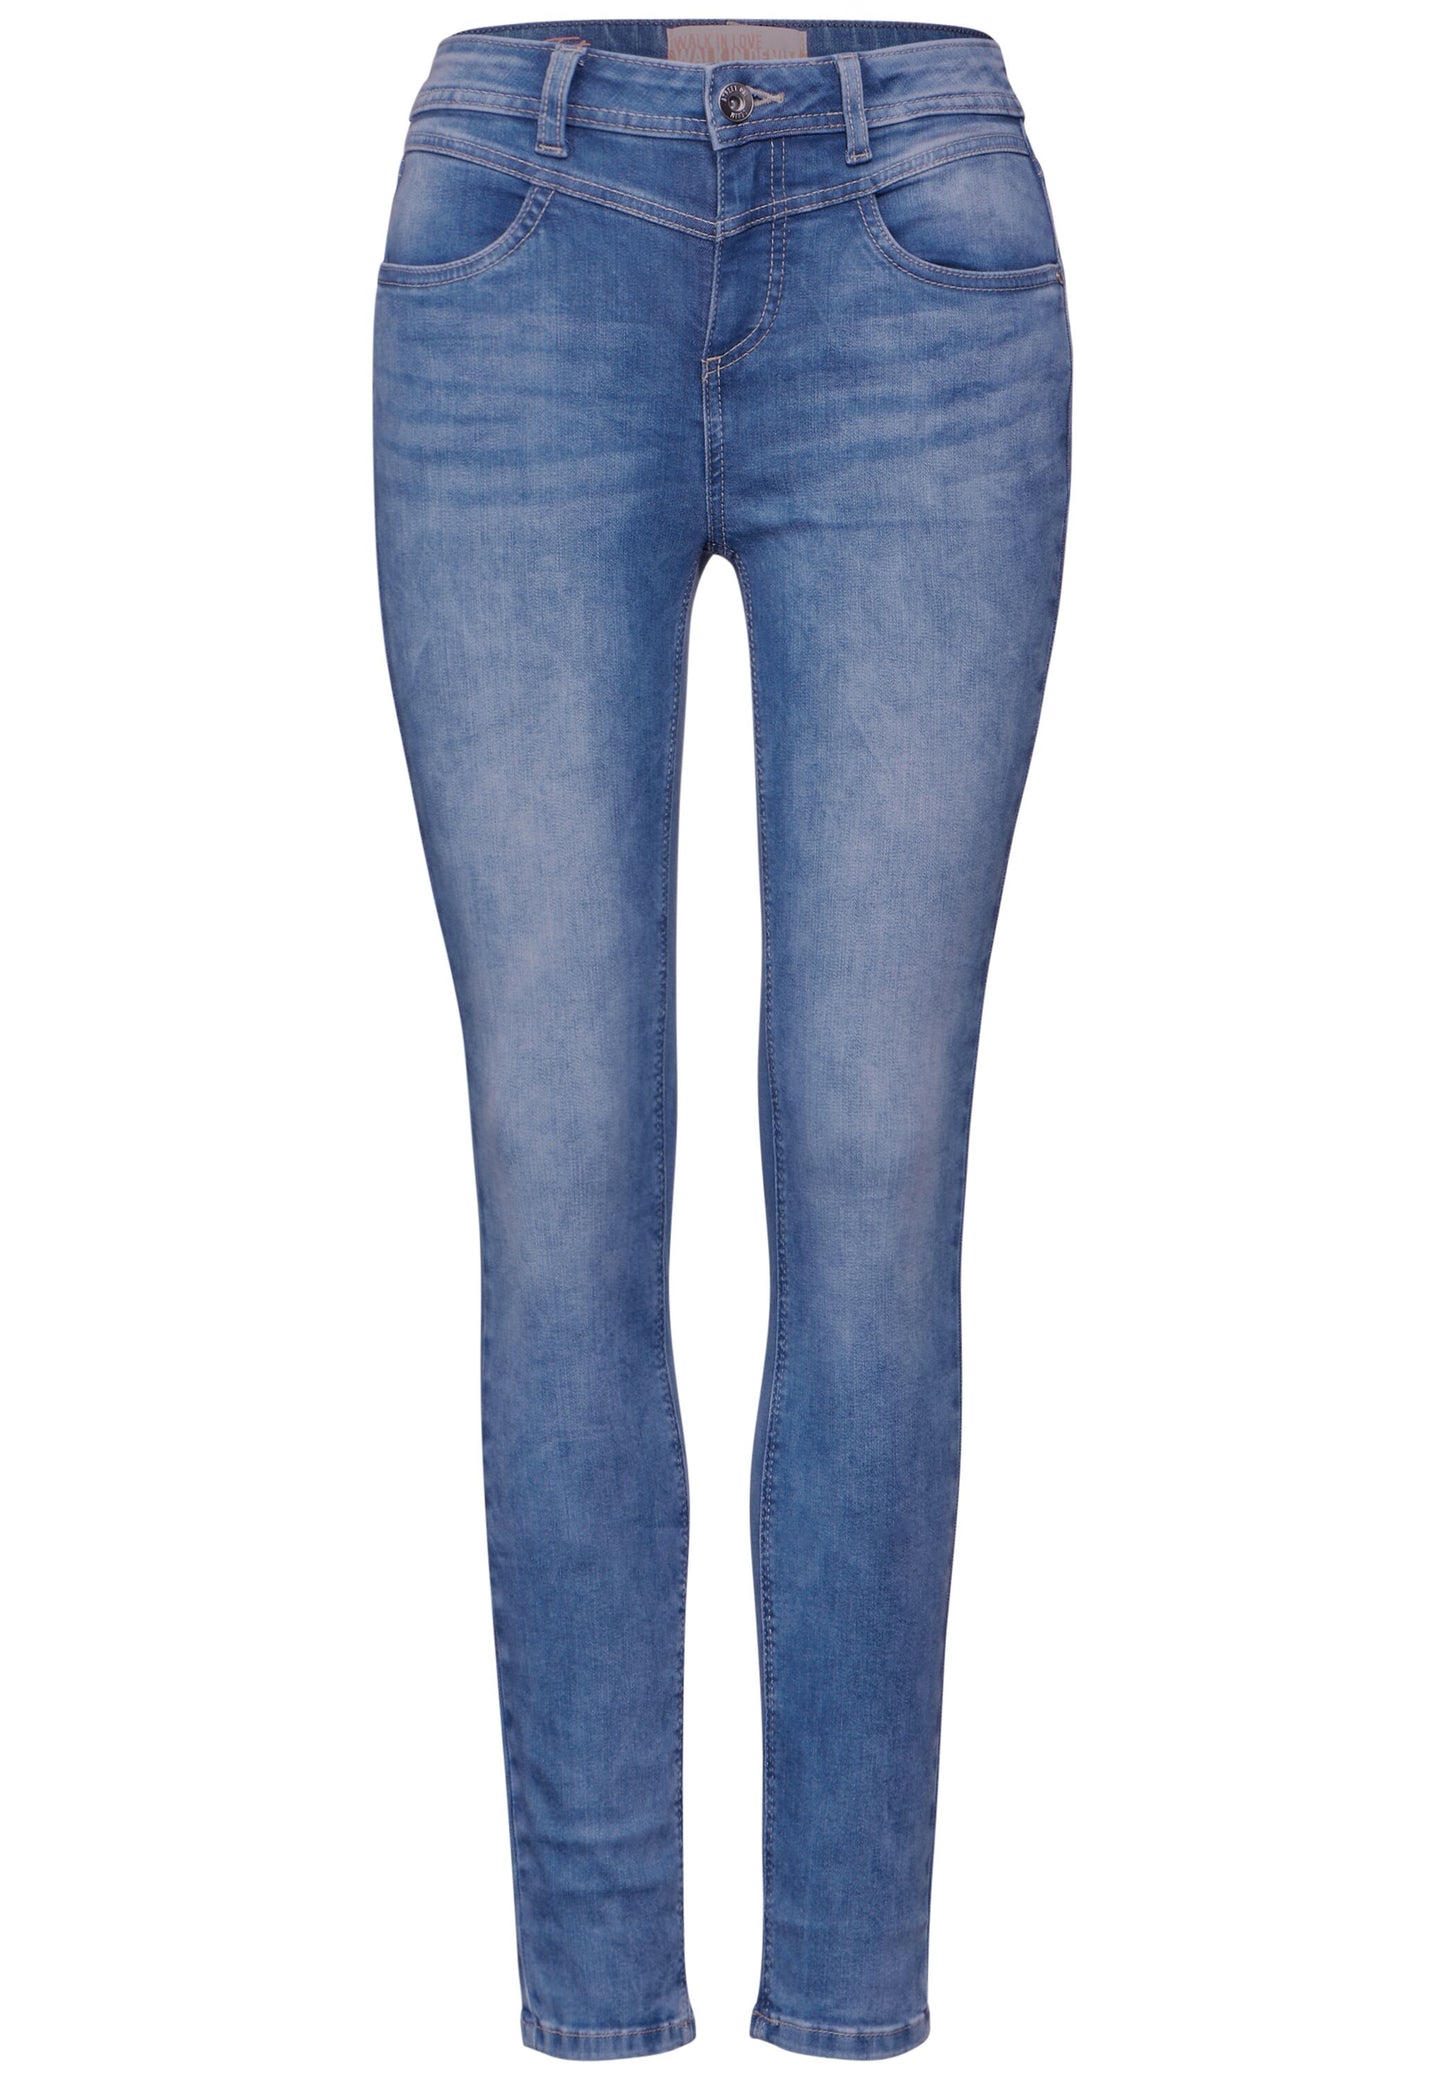 Street One - Slim Fit Jeans - light blue random wash